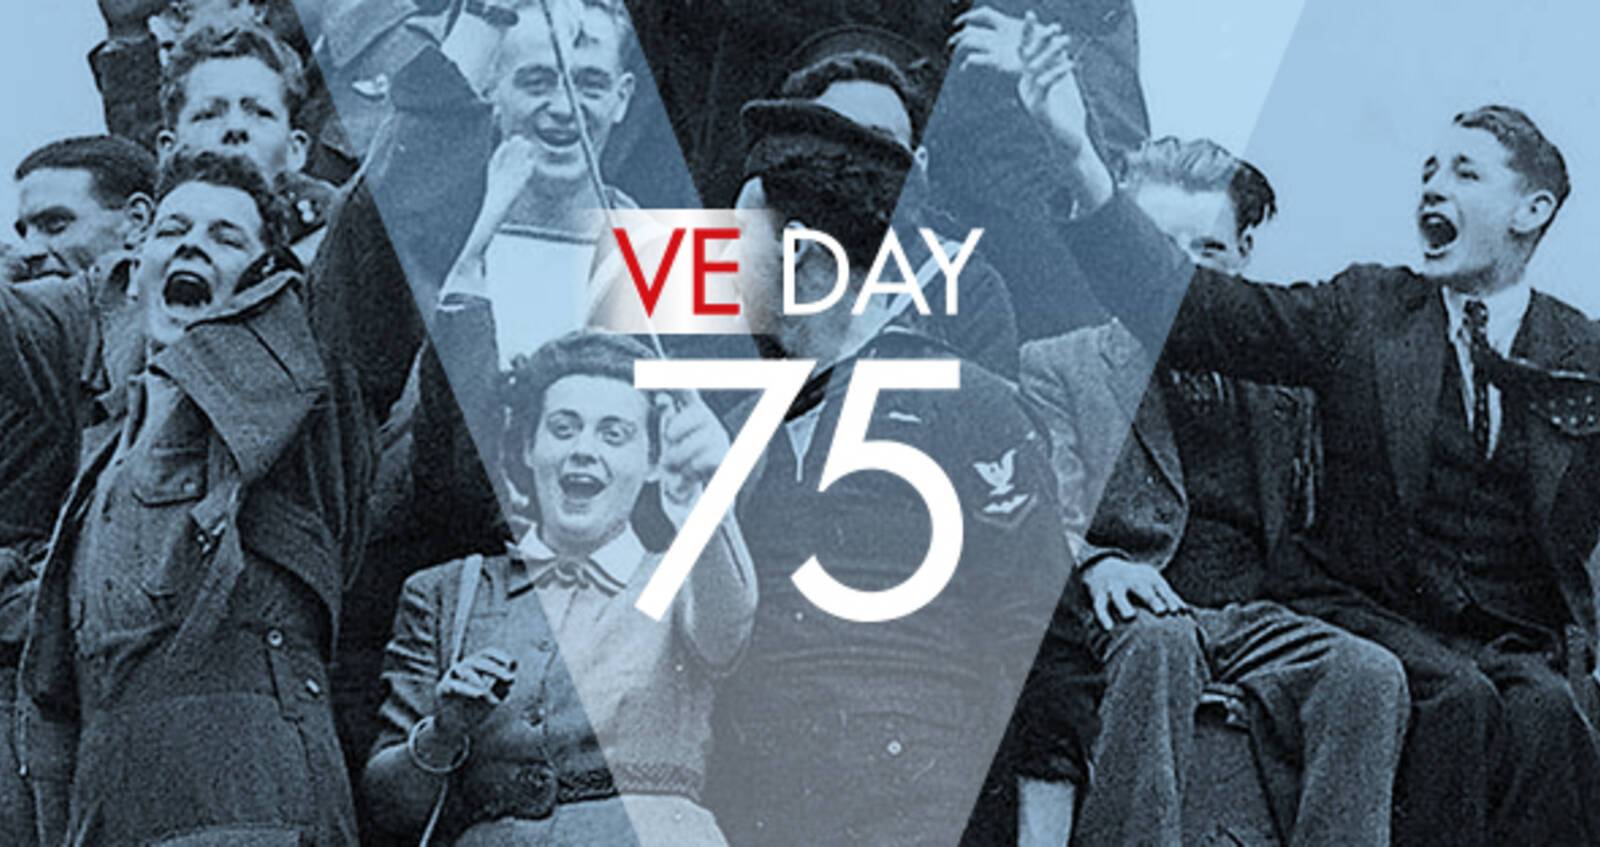 Watford prepares to celebrate VE Day 75th anniversary virtually